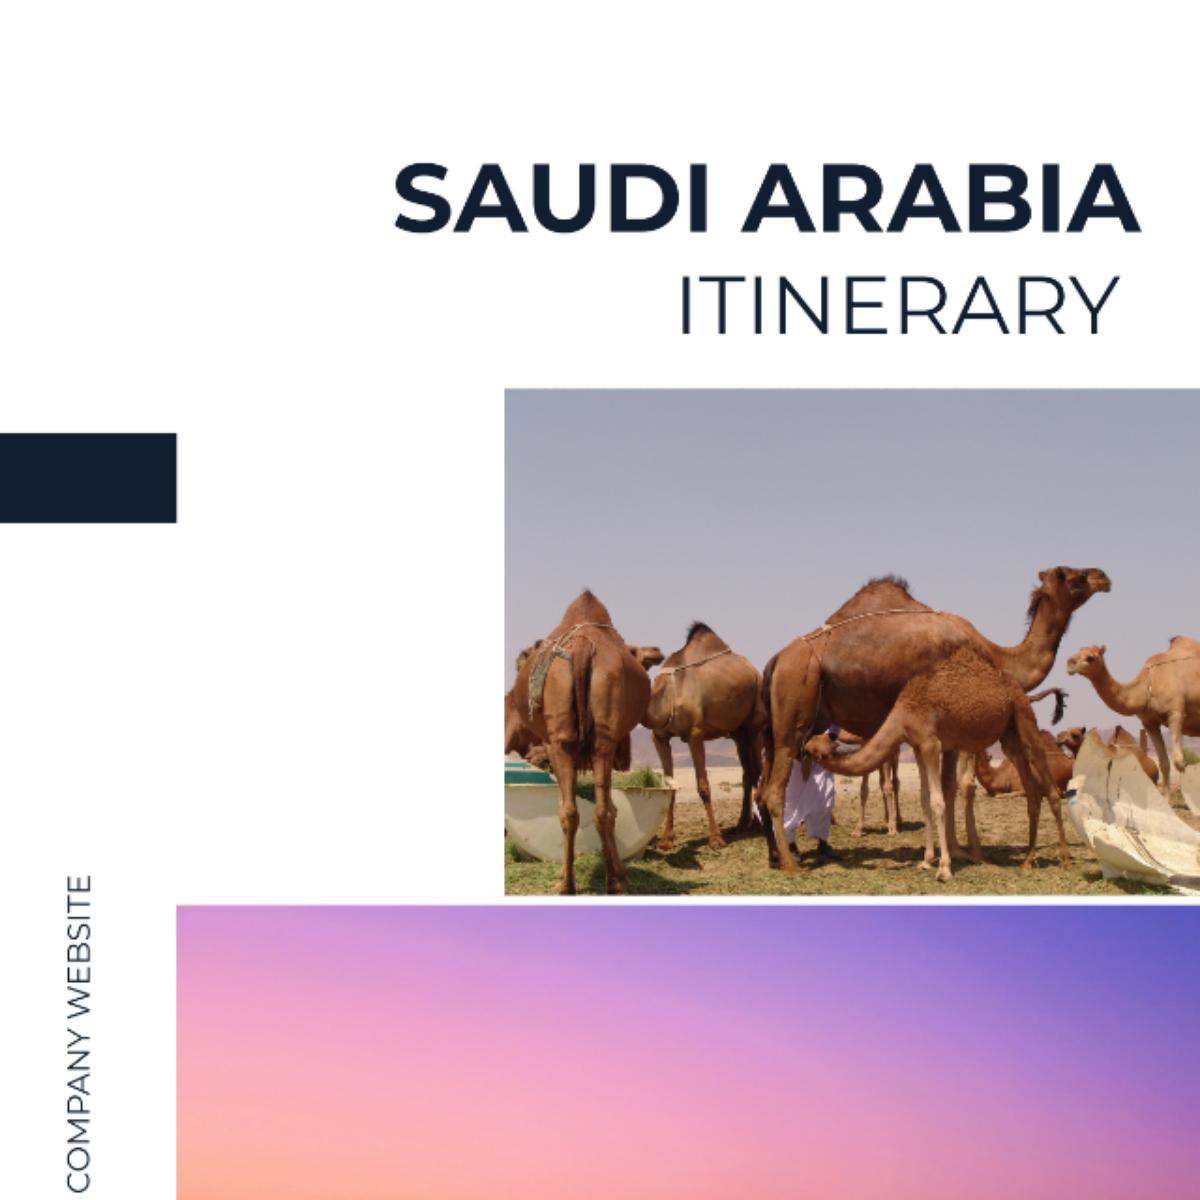  Saudi Arabia Itinerary Template